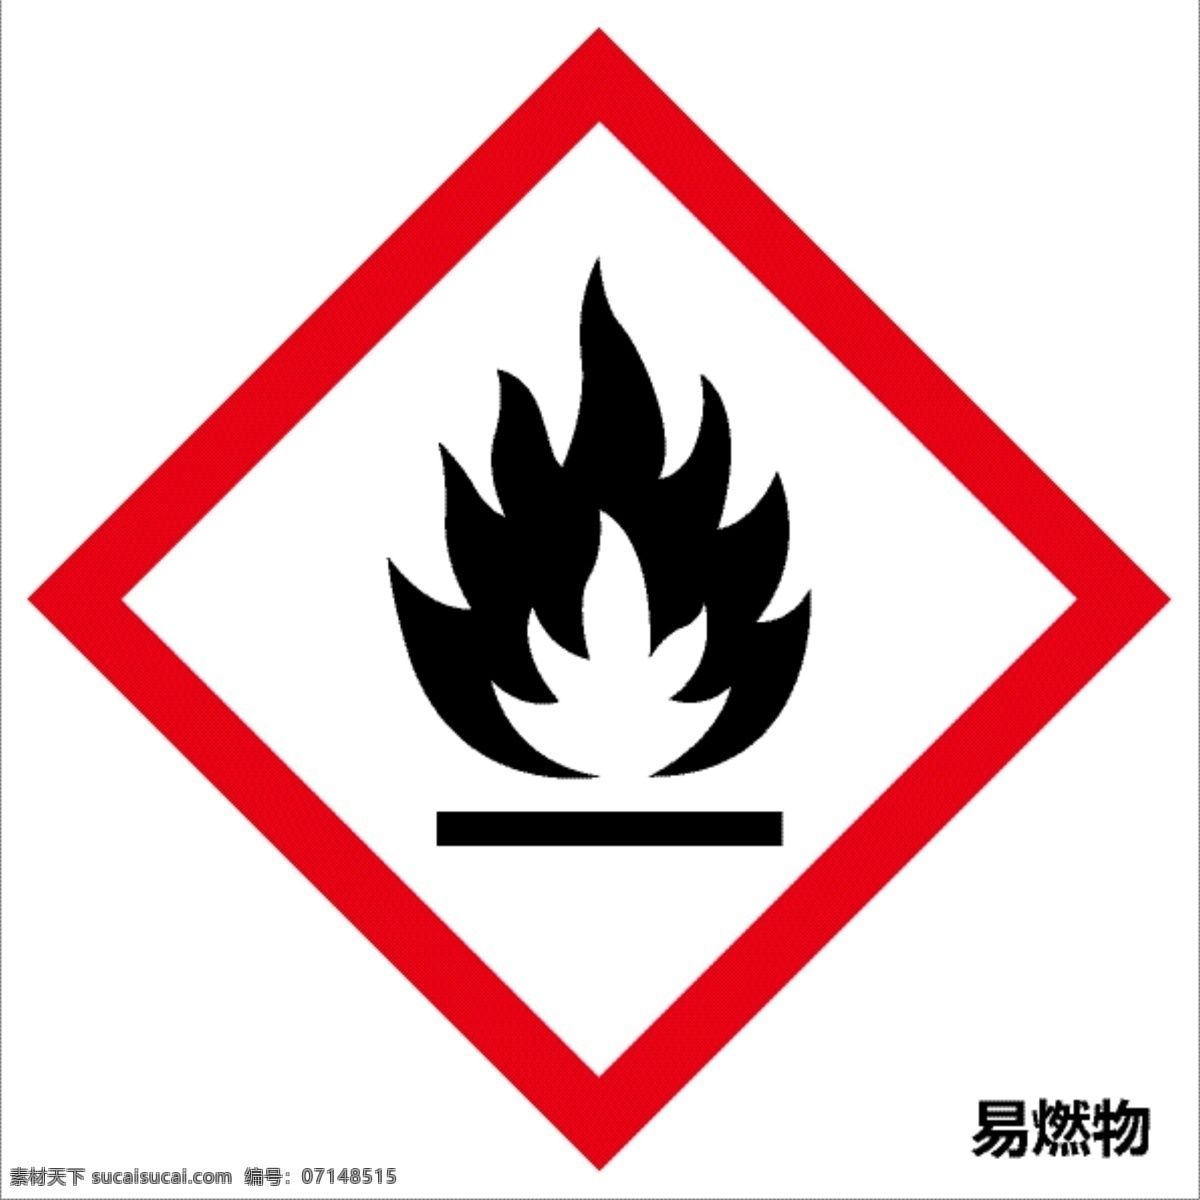 ghs易燃物 ghs 全球 危险化学品 标识 易燃物 原文件 失量 图标 标识标志图标 矢量